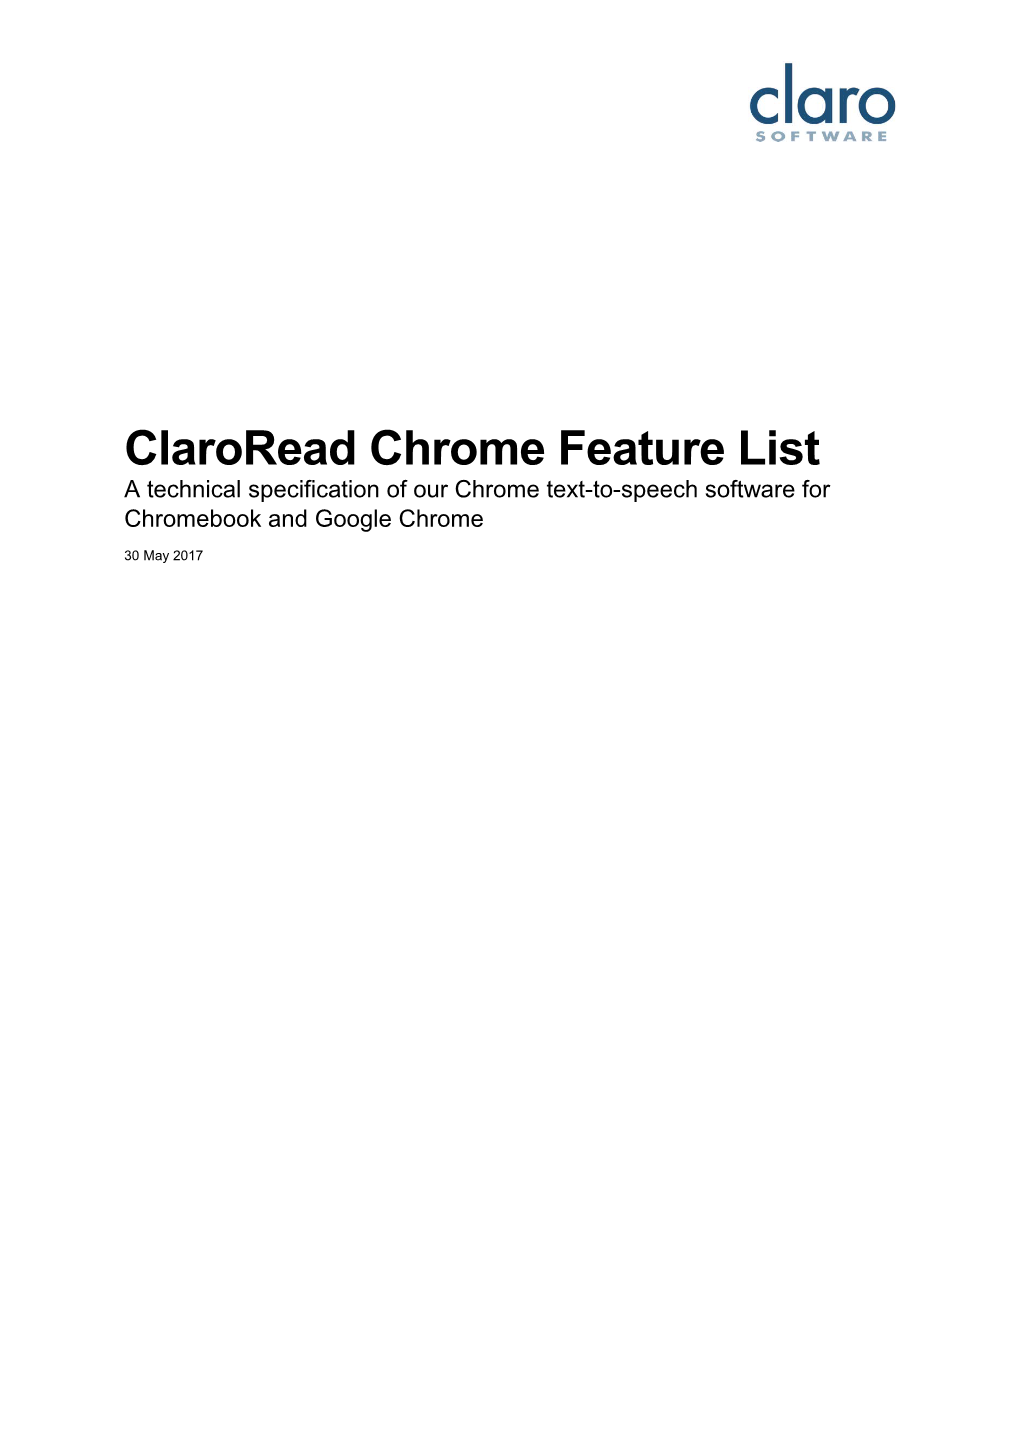 Claroread Chrome Extension Specification